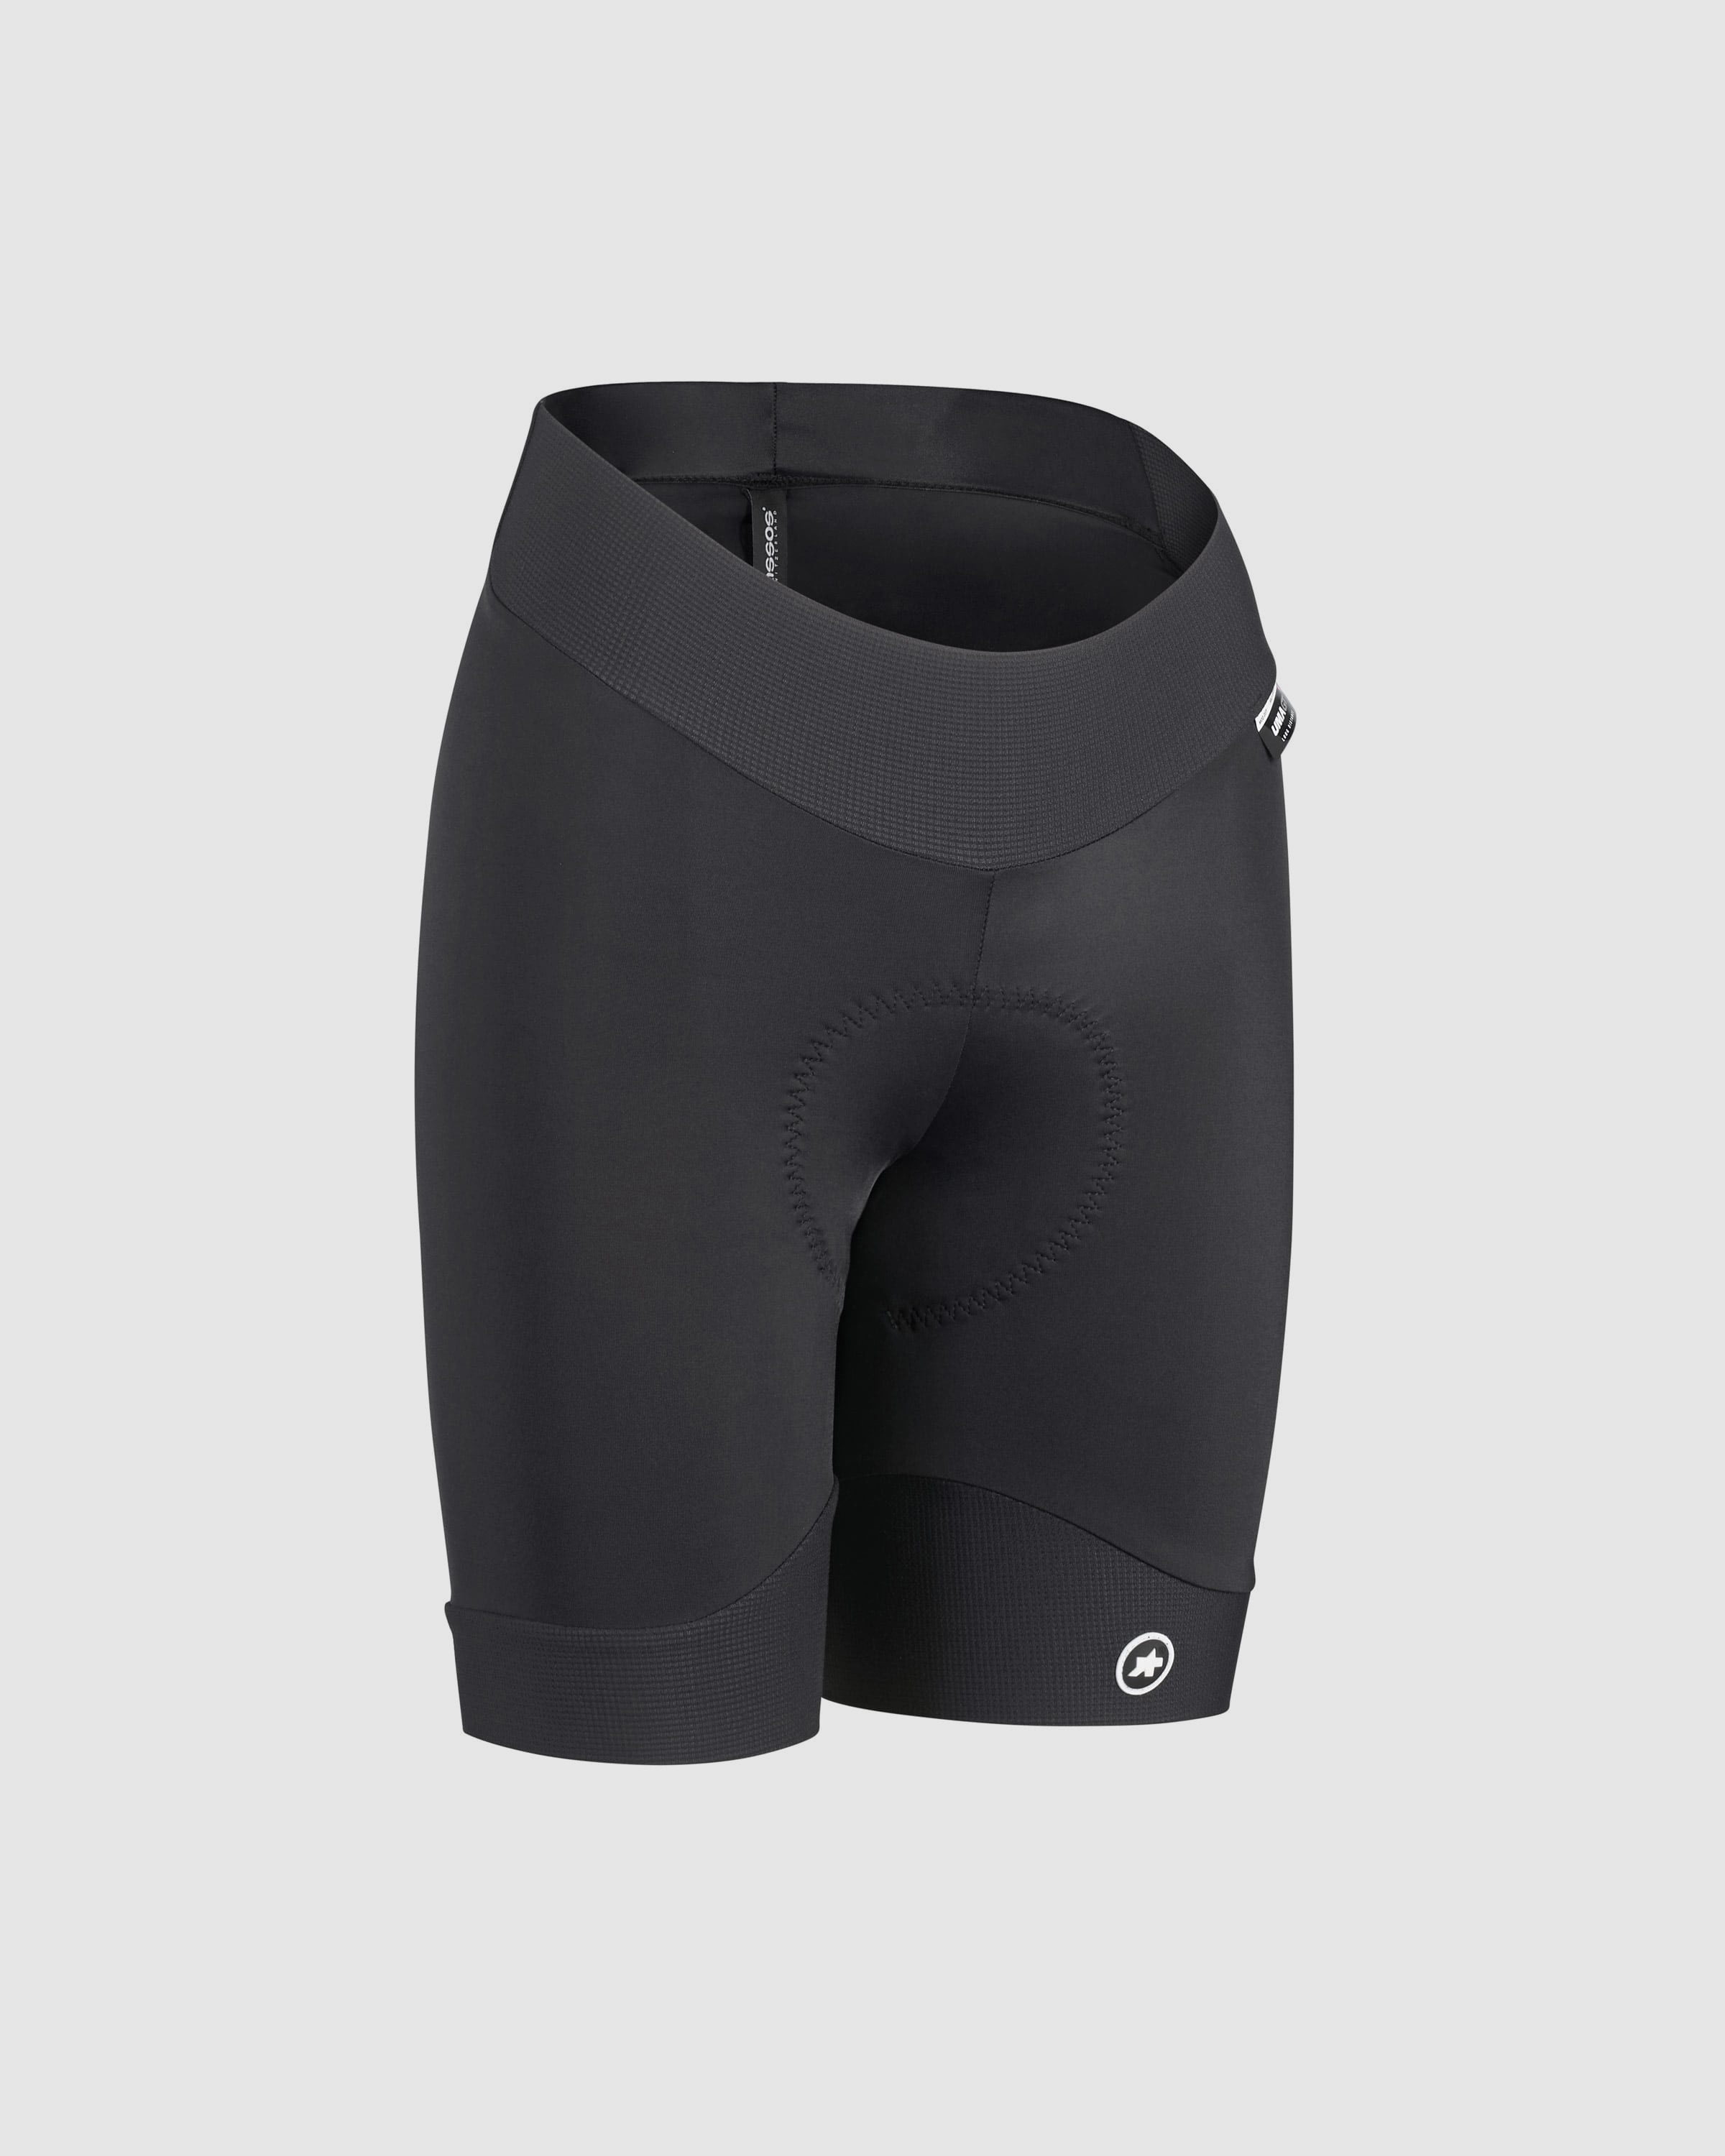 UMA GT Half Shorts EVO - ASSOS Of Switzerland - Official Outlet